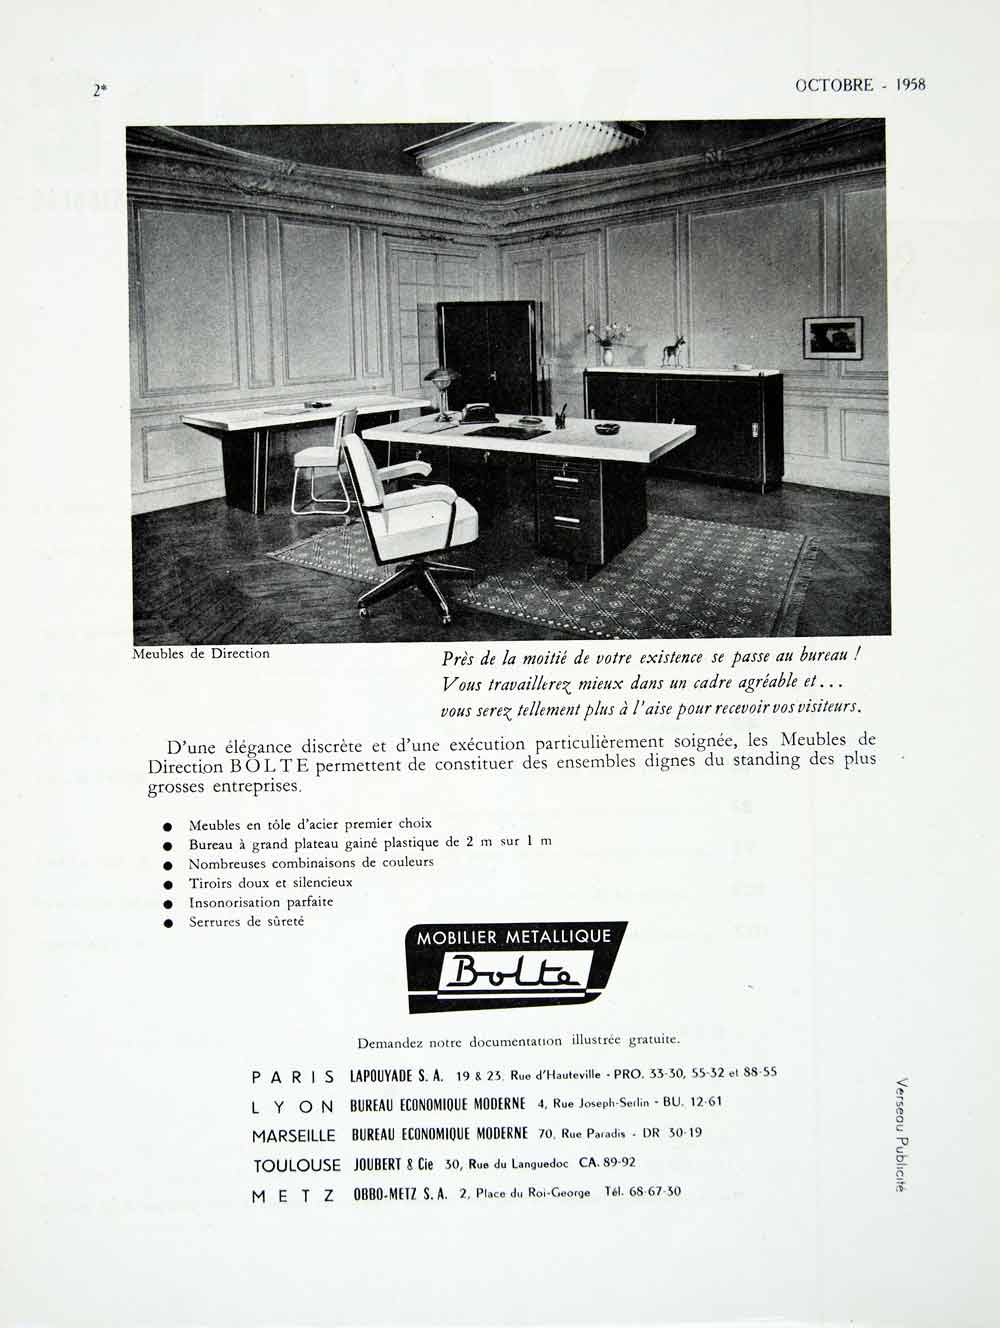 1958 Ad Bolte Executive Office Furniture French Mobilier Metallique Bolte VEN1